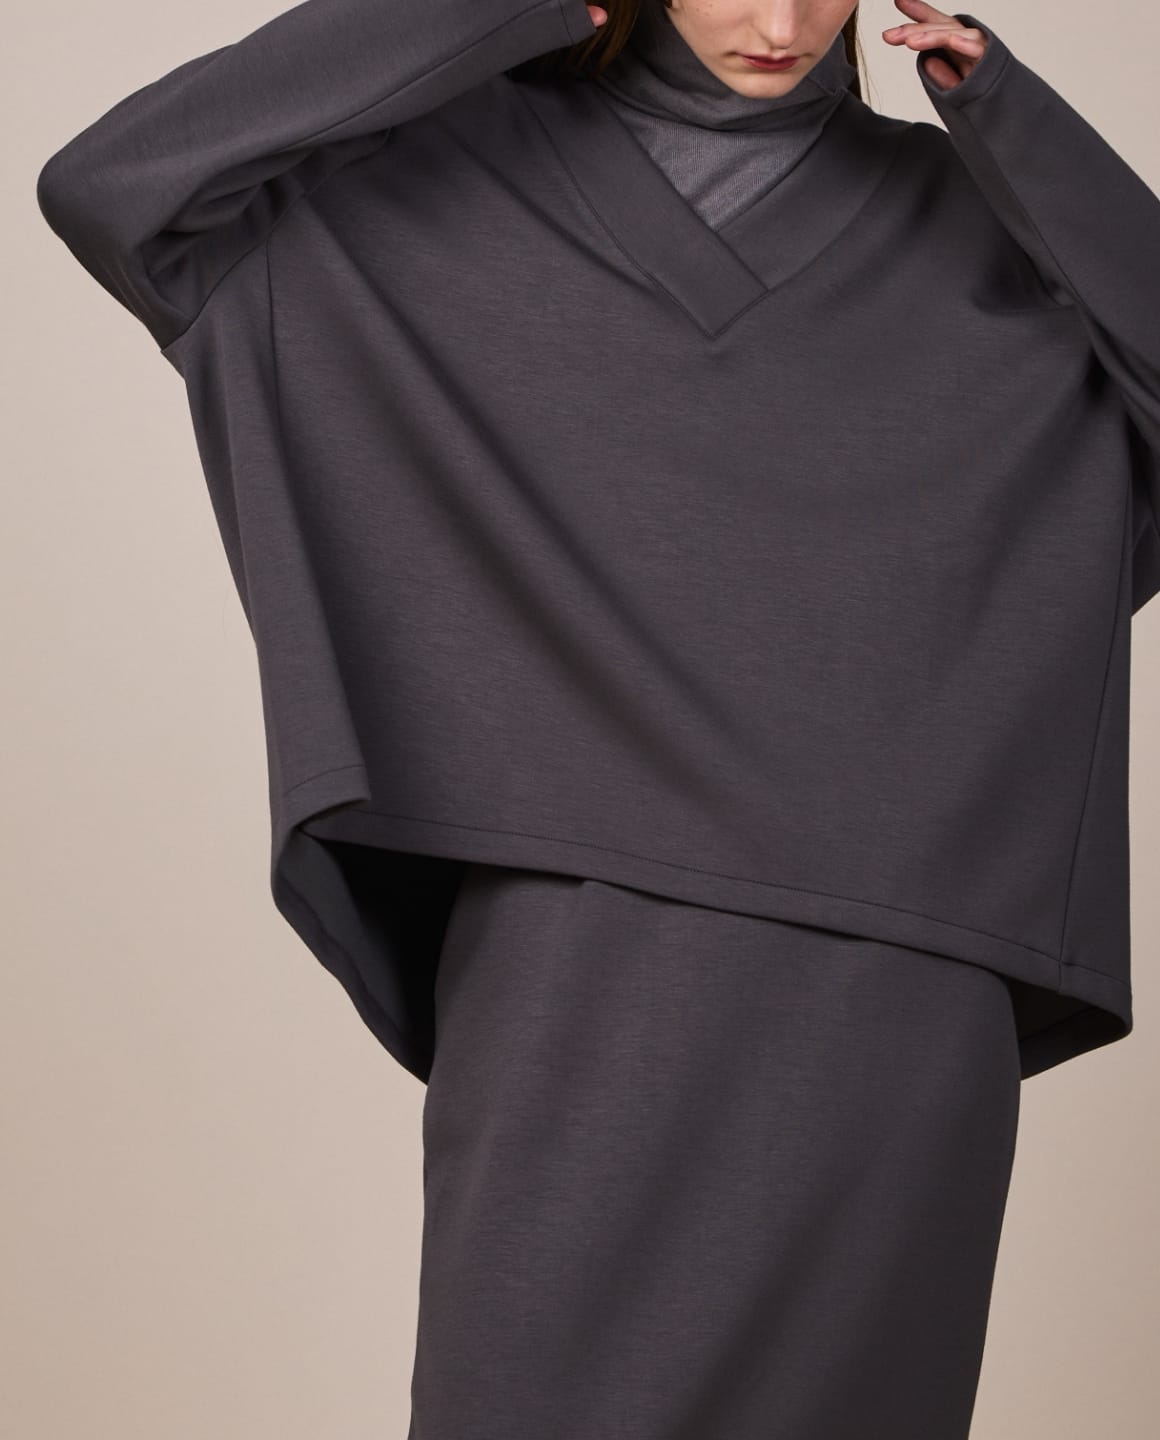 Vネックプルオーバーチャコール、タイトスカートチャコールを着用している女性モデルの腰上写真 modal